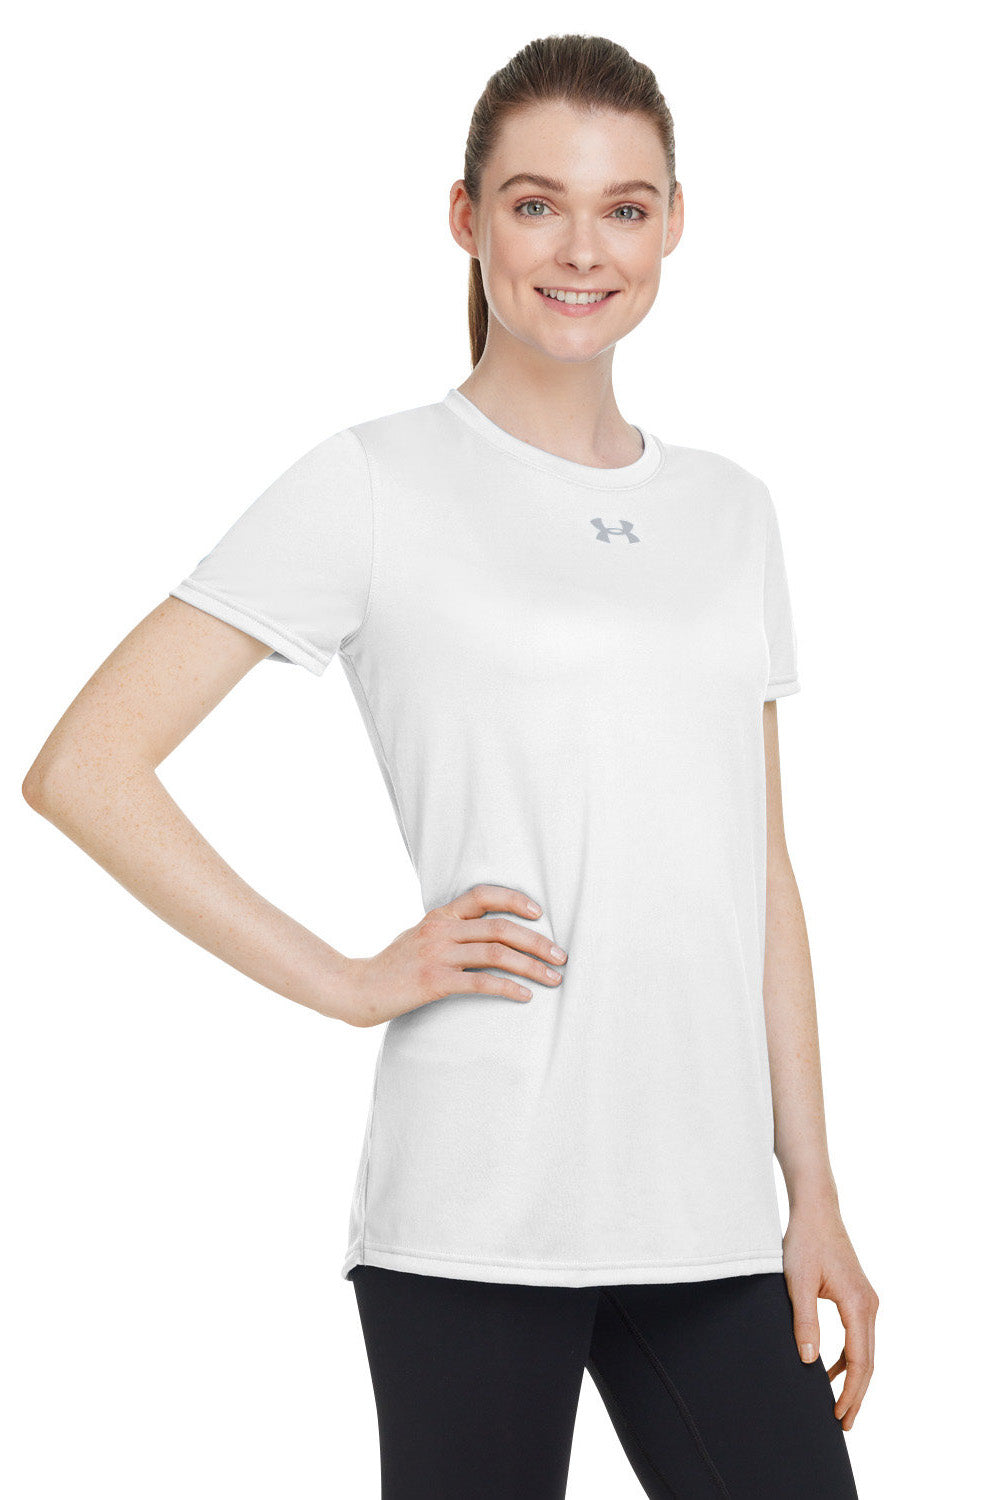 Under Armour 1376847 Womens Team Tech Moisture Wicking Short Sleeve Crewneck T-Shirt White Model 3Q